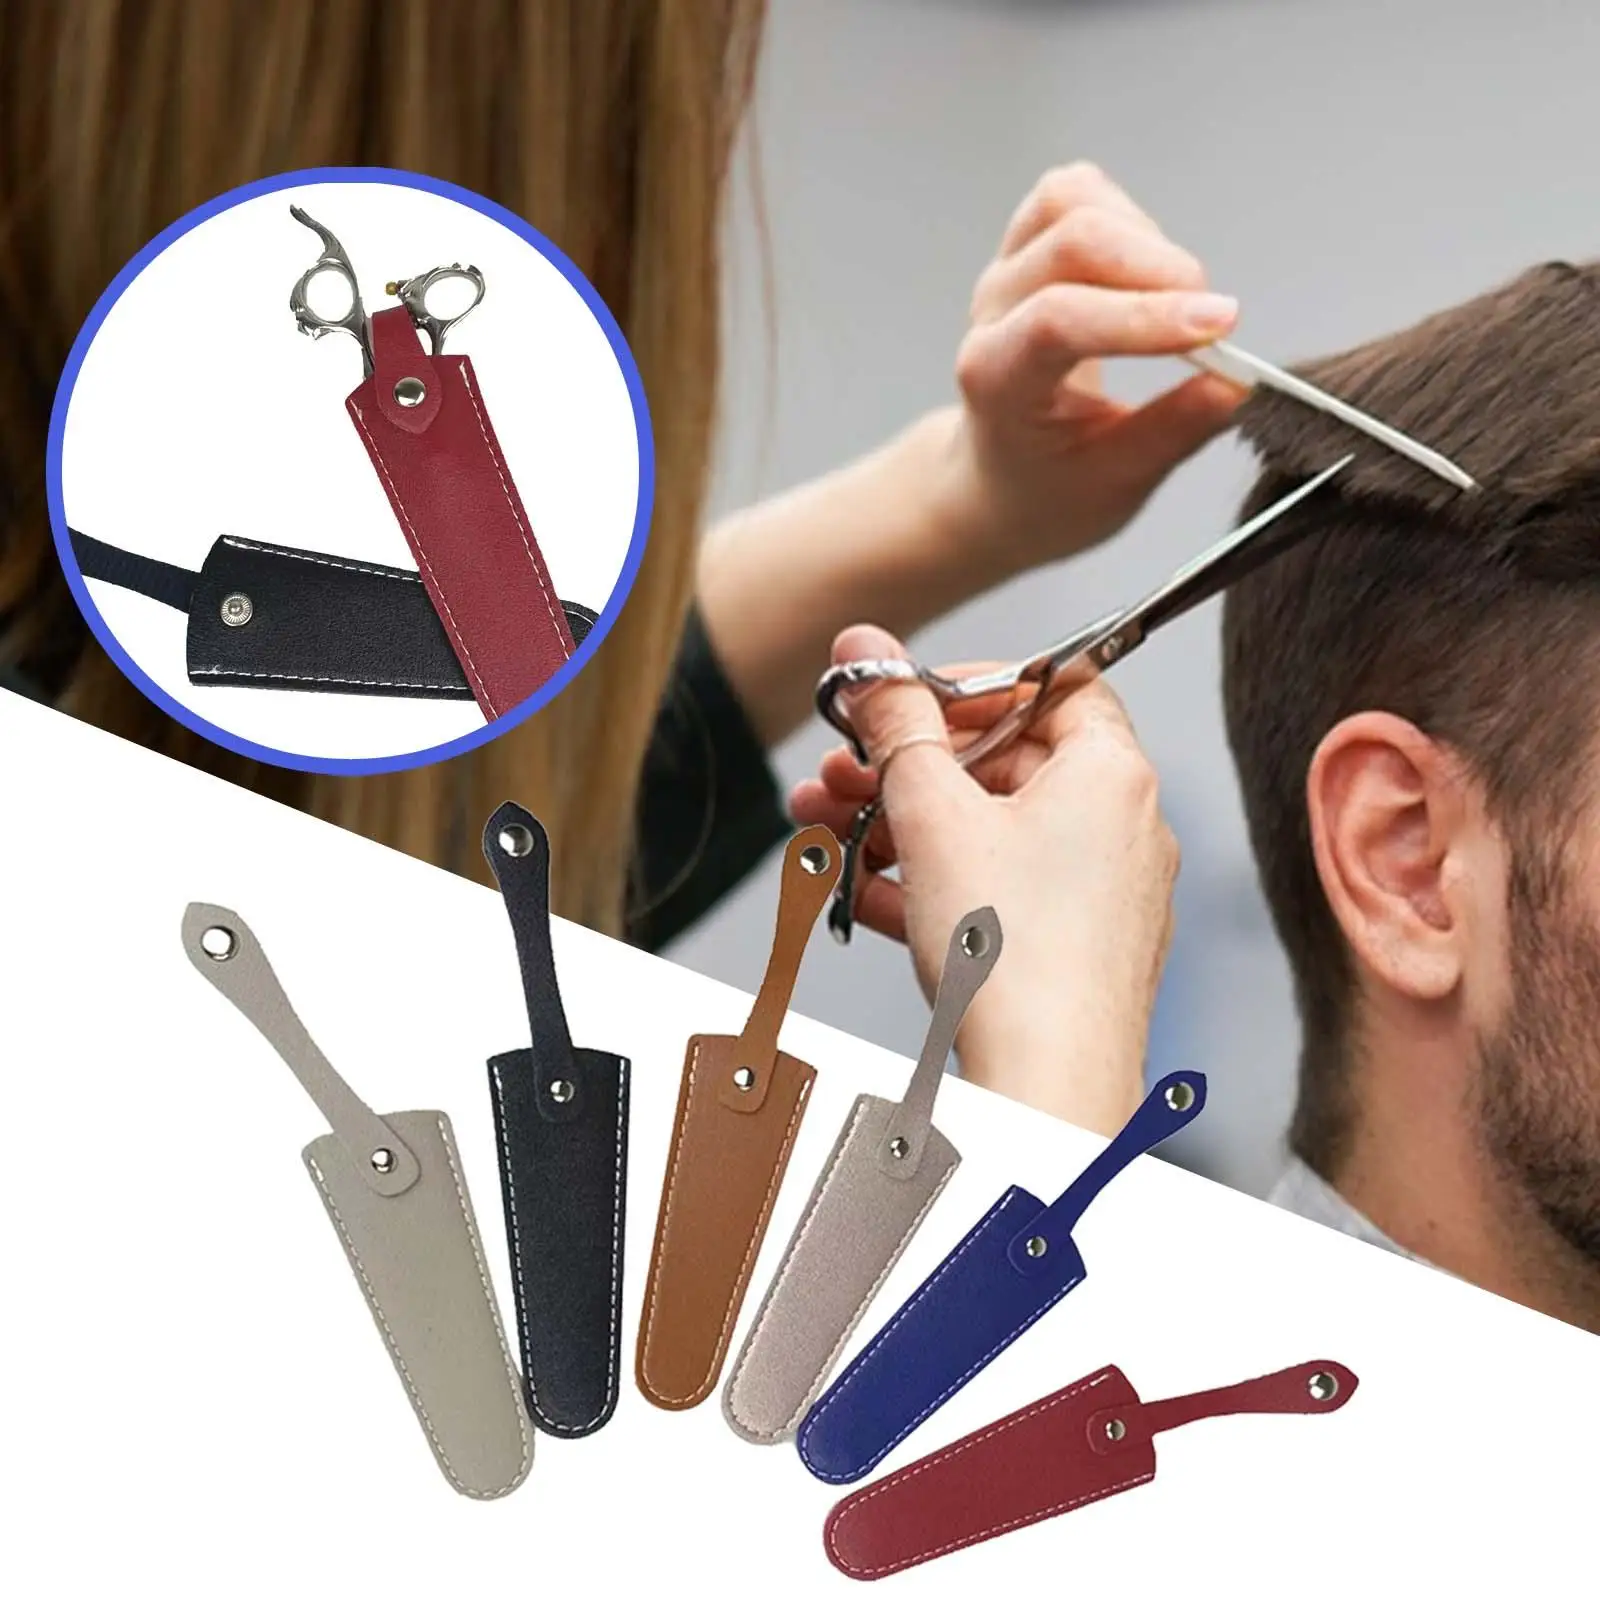 

6 Pieces Sewing Scissor Sheath Salon Hair Scissor Bag Holster Organizer for Hair Cutting Scissors Beauty Tool Protection Stylist